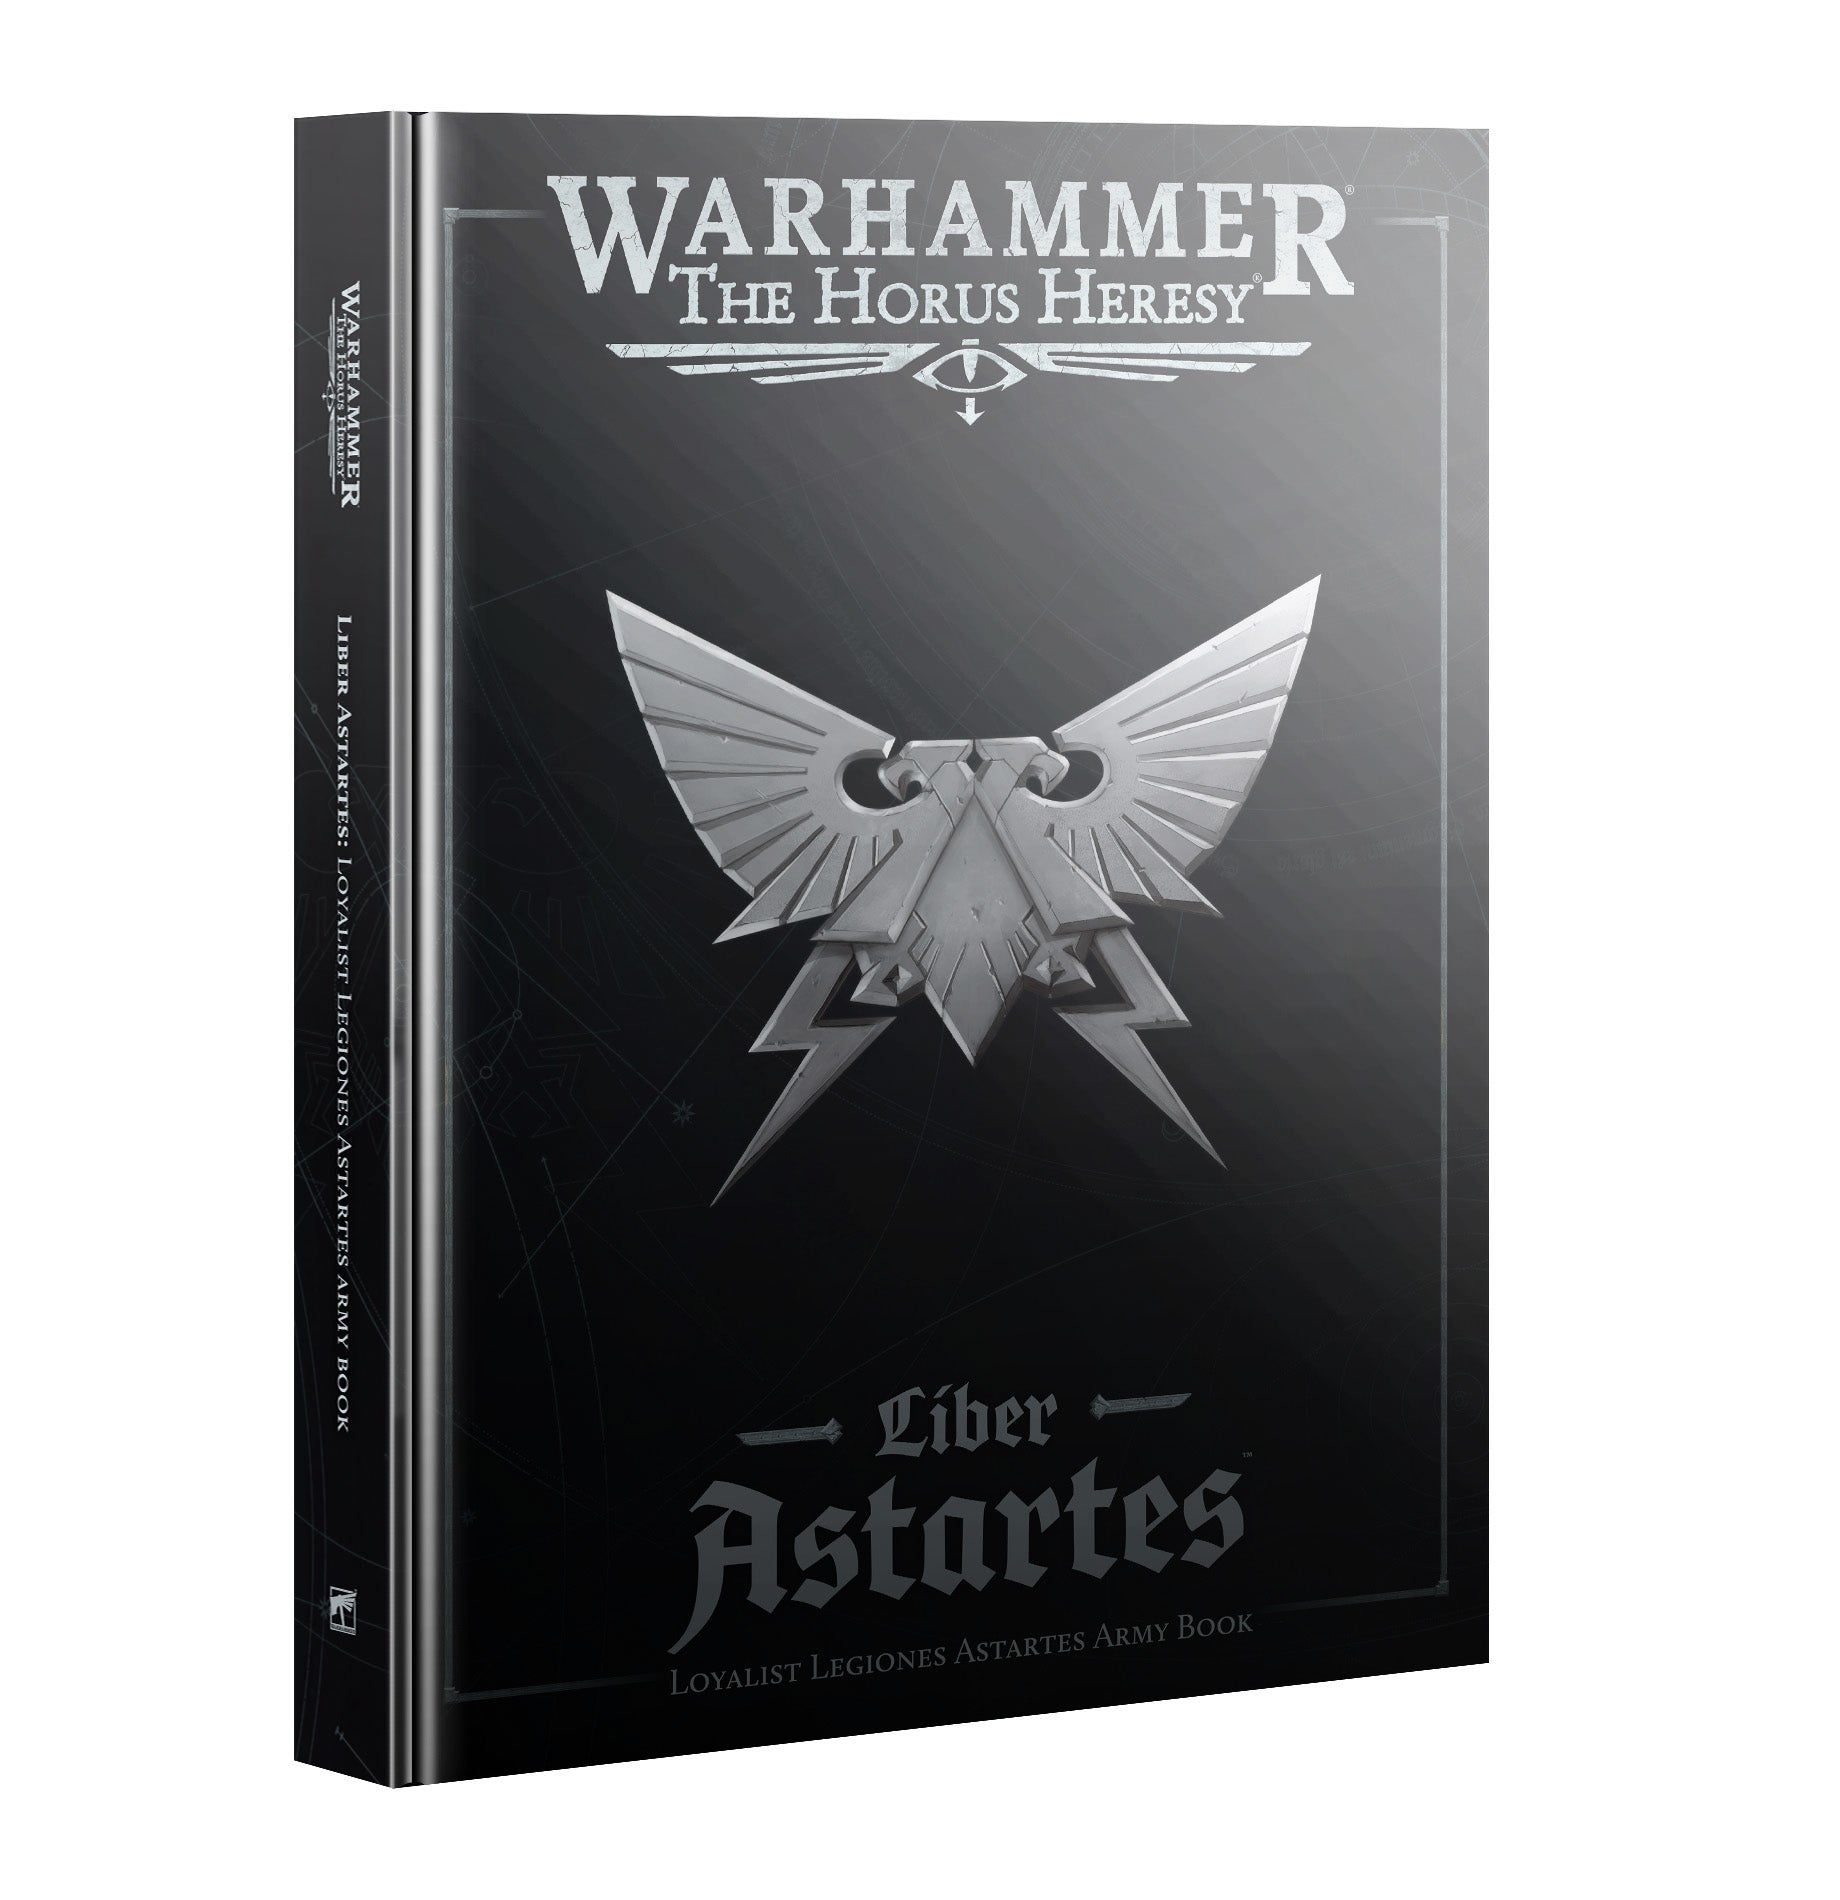 Warhammer Horus Heresy: Liber Astartes Loyalist Legiones Army Book